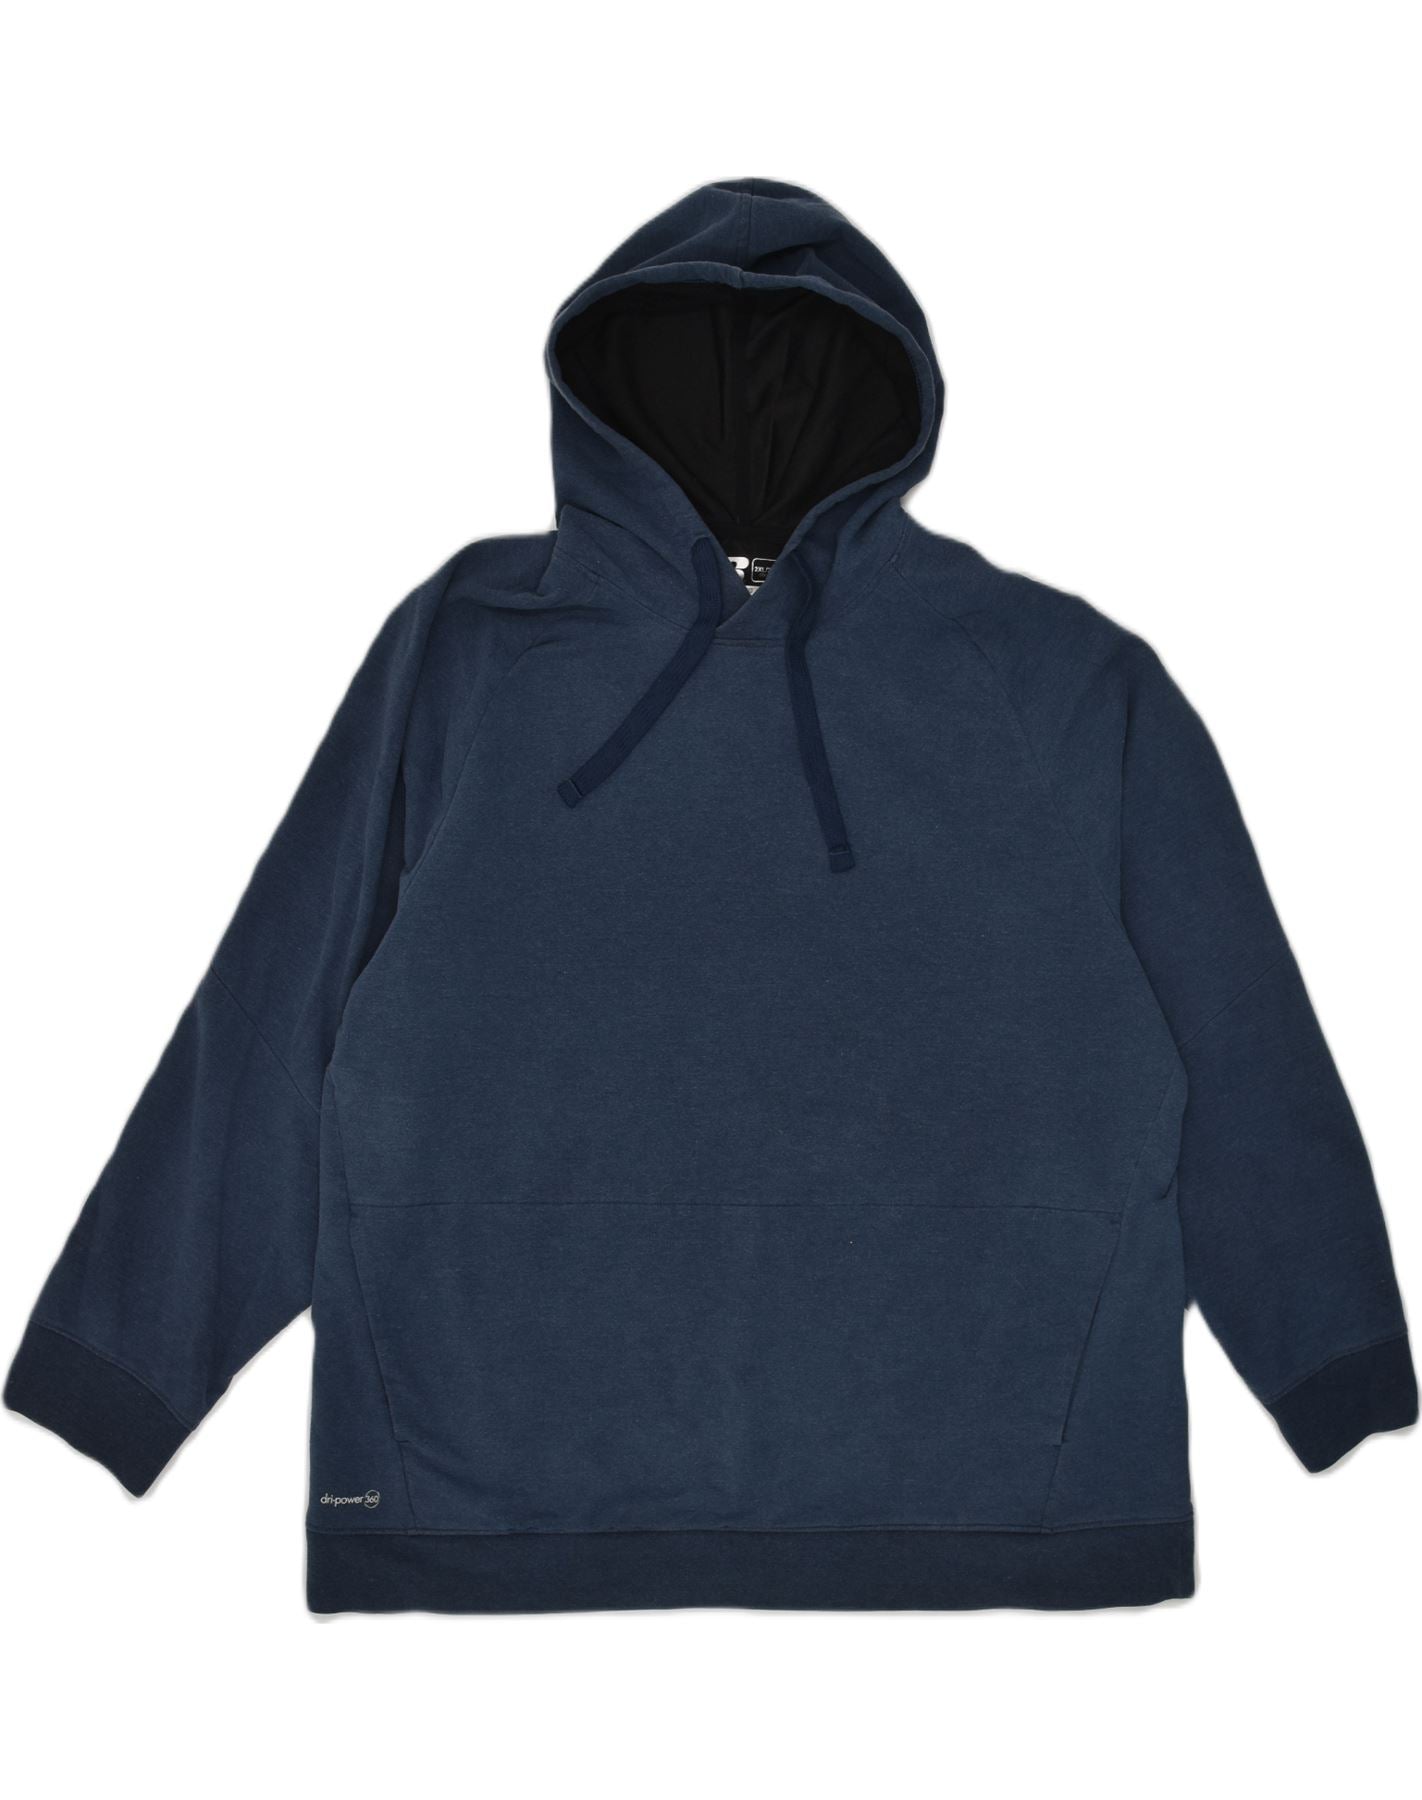 Russell Athletic Men's Dri-Power Hooded Pullover Fleece Sweatshirt